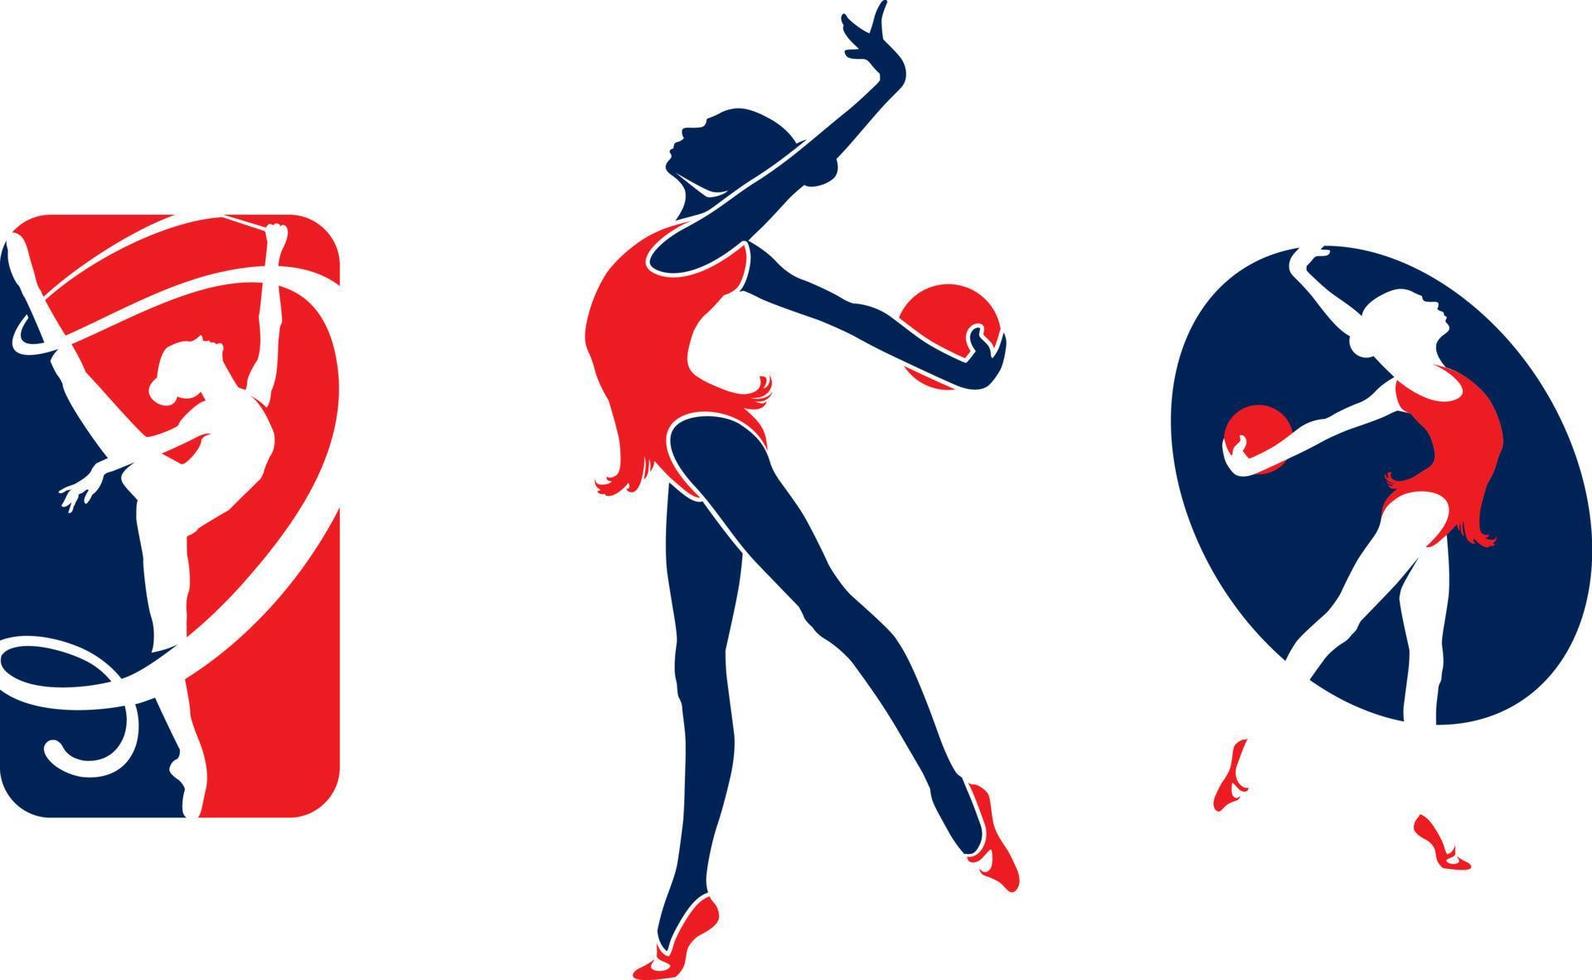 deportistas de gimnasia rítmica, íconos deportivos, logos deportivos.ilustración. chica vector